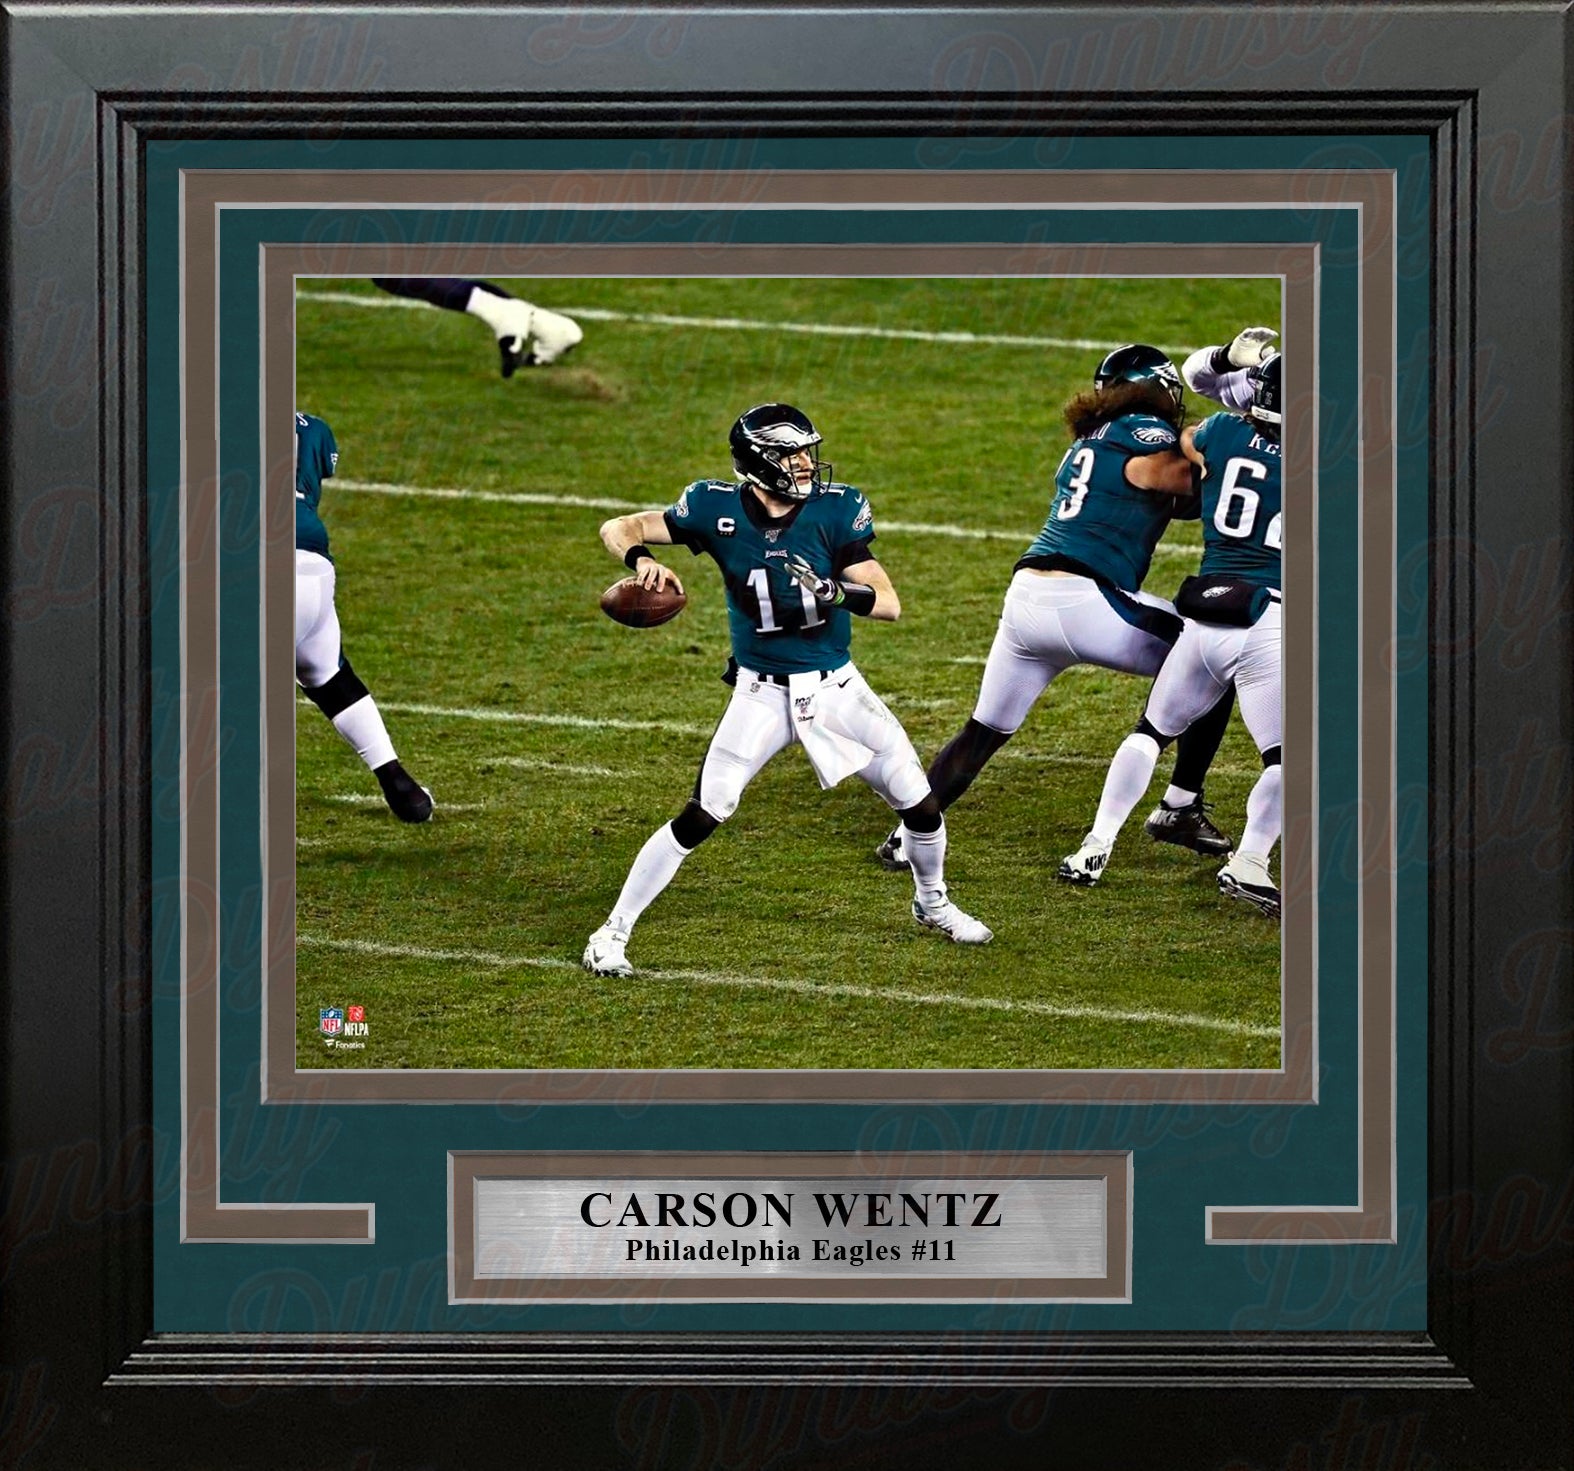 Carson Wentz in Action Philadelphia Eagles 8" x 10" Framed Football Photo - Dynasty Sports & Framing 